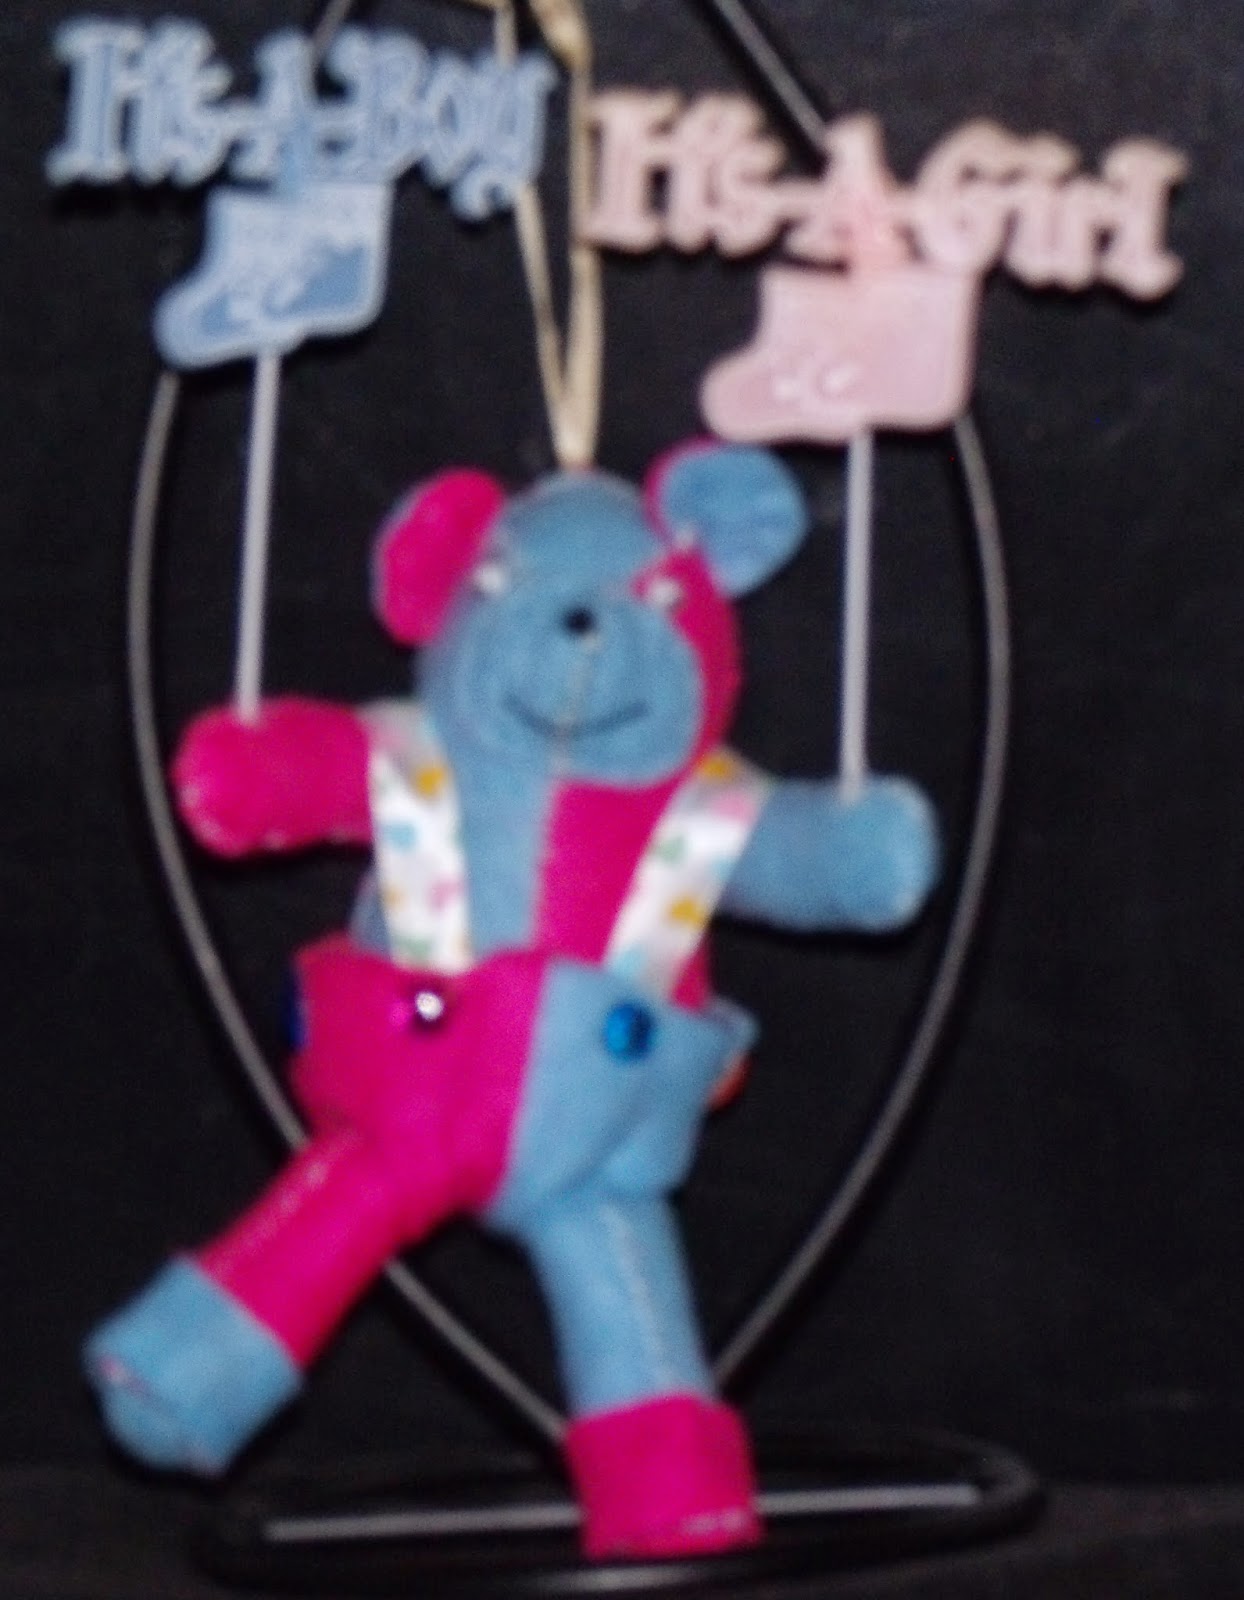 http://bearyamazing.storenvy.com/products/10381368-indecisive-handmade-100-hand-stitched-stuffed-felt-5-inch-bear-its-a-boy